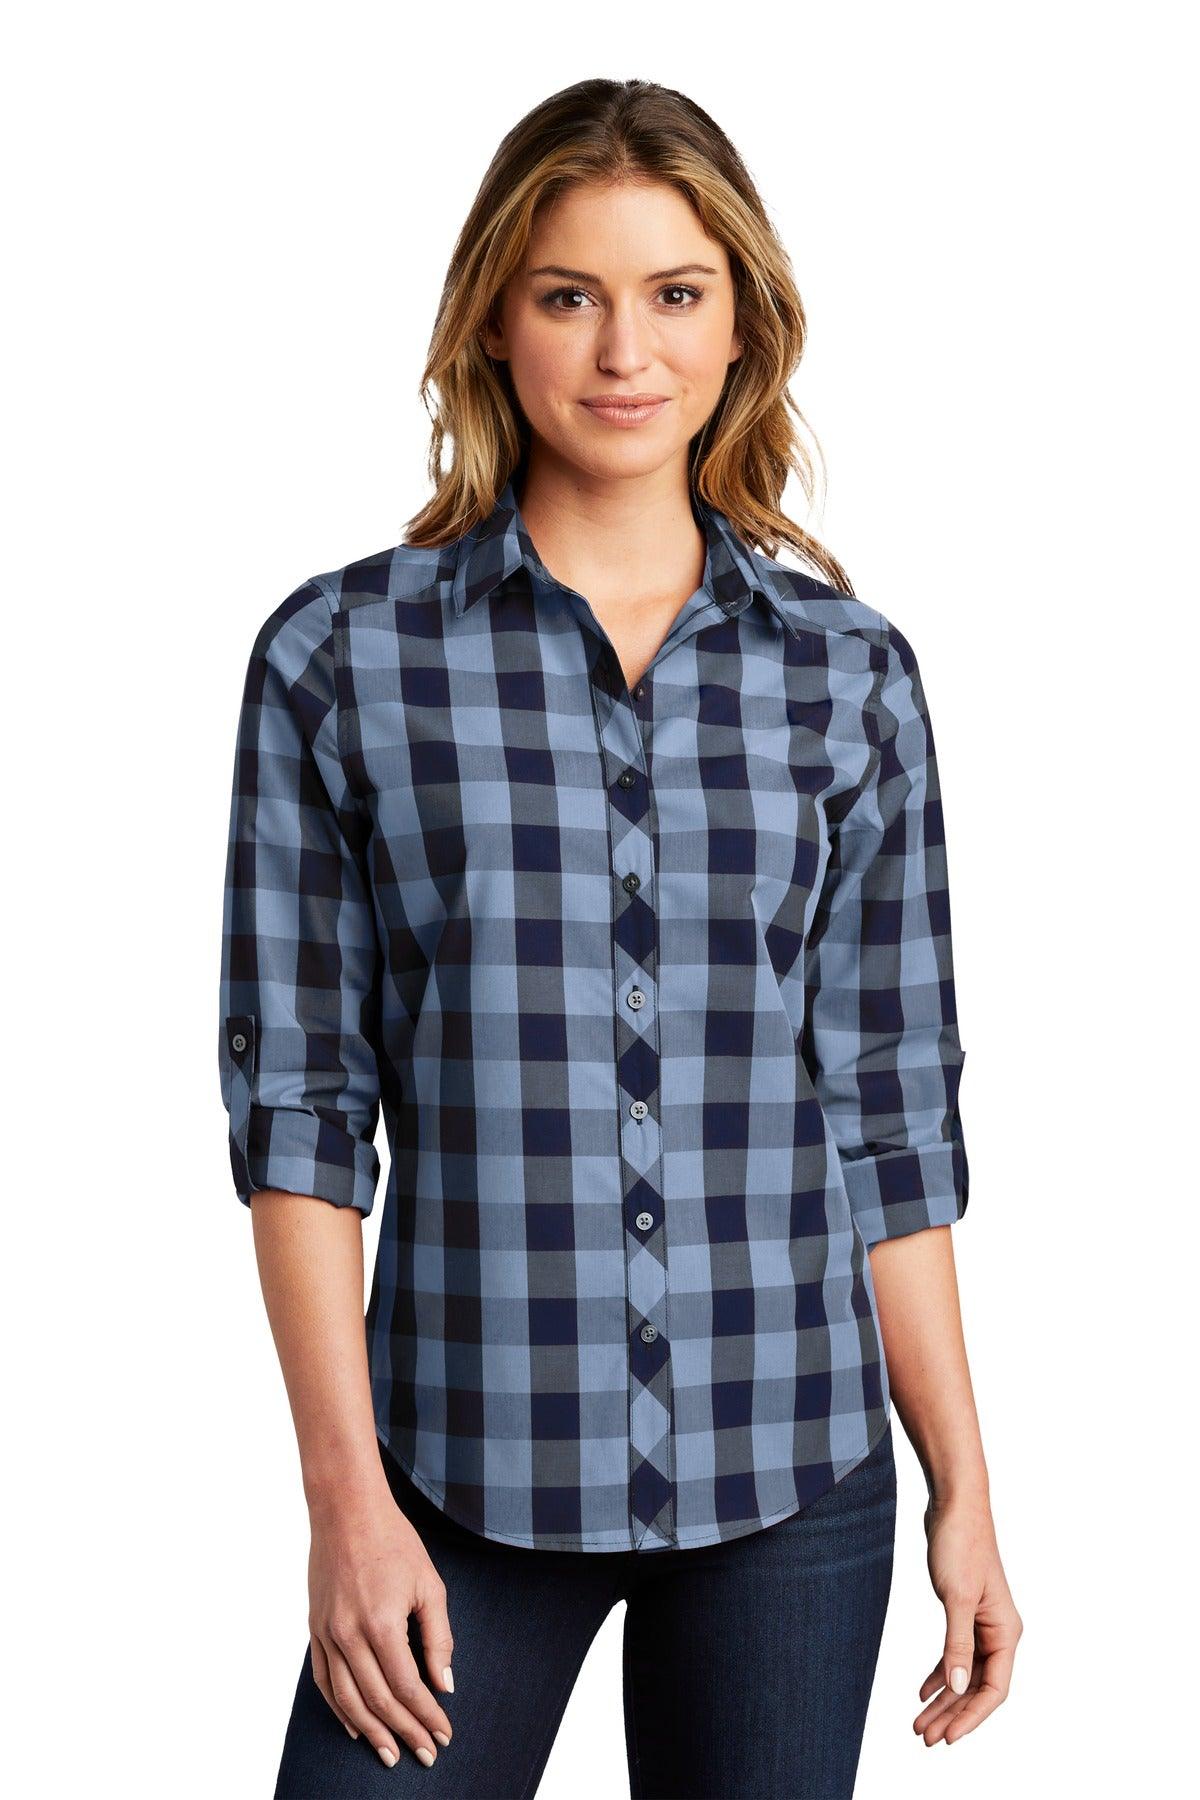 Port Authority Ladies Everyday Plaid Shirt. LW670 - Dresses Max